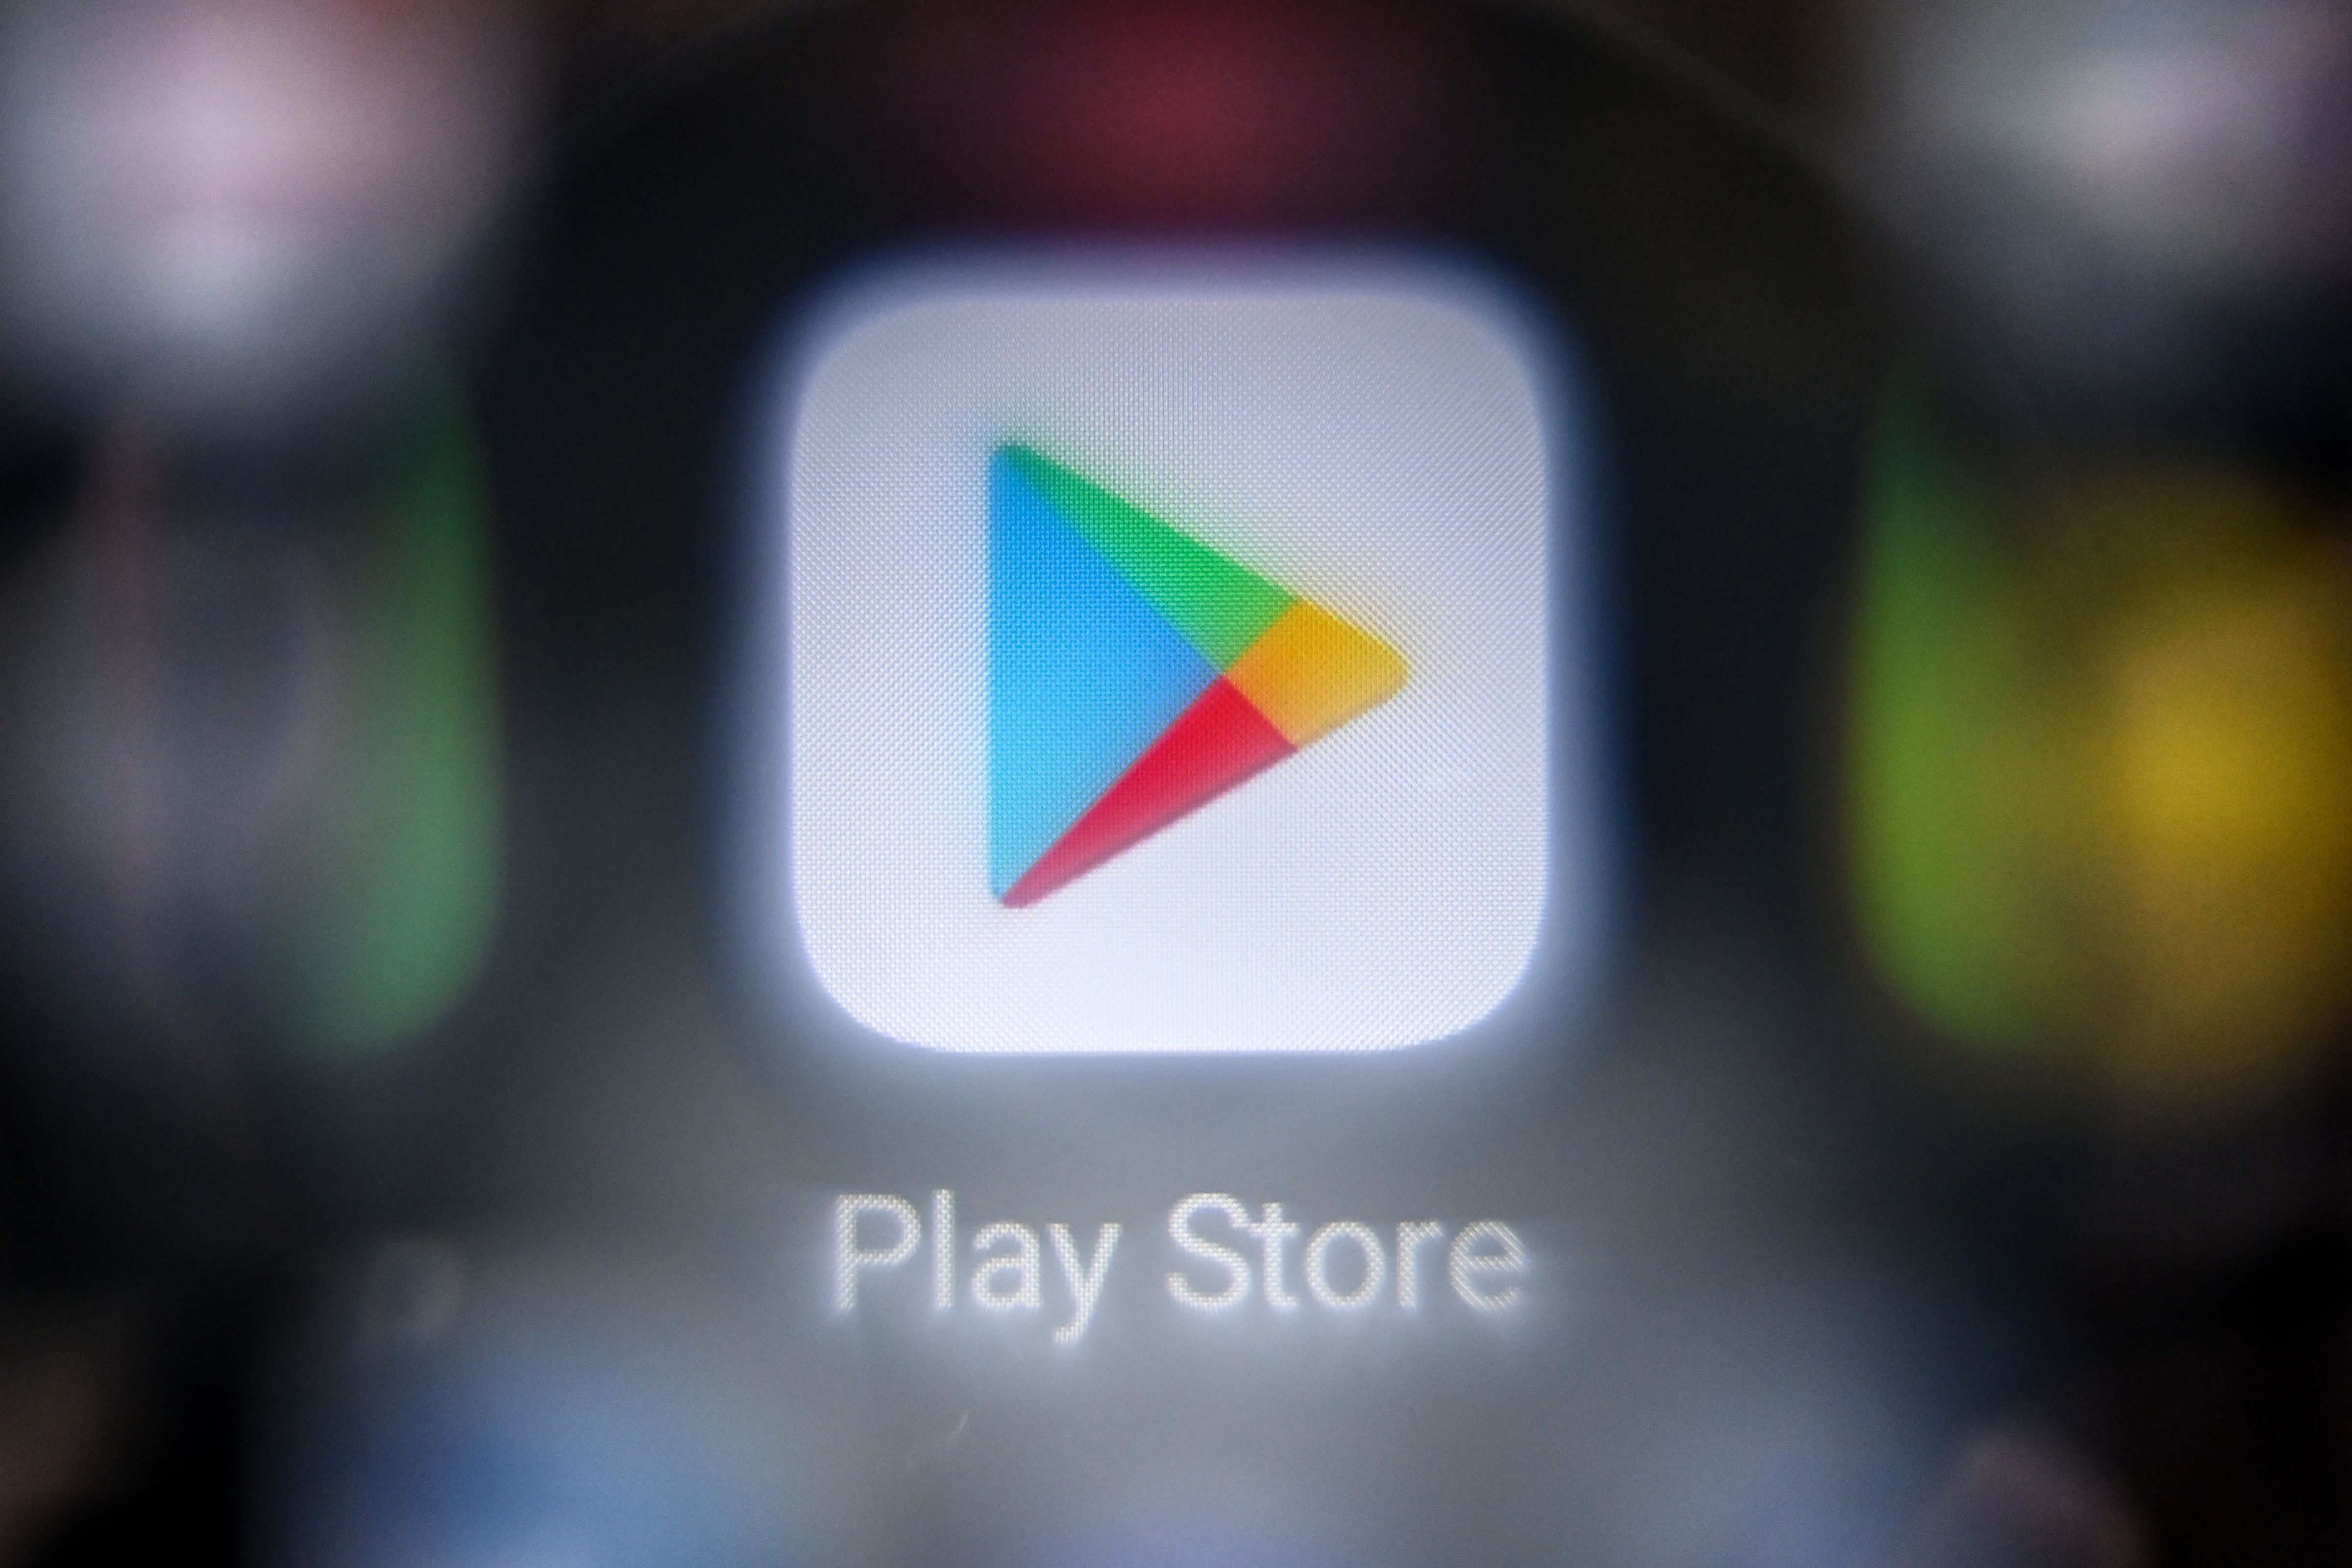 Google's Epic legal defeat threatens $200 billion app store